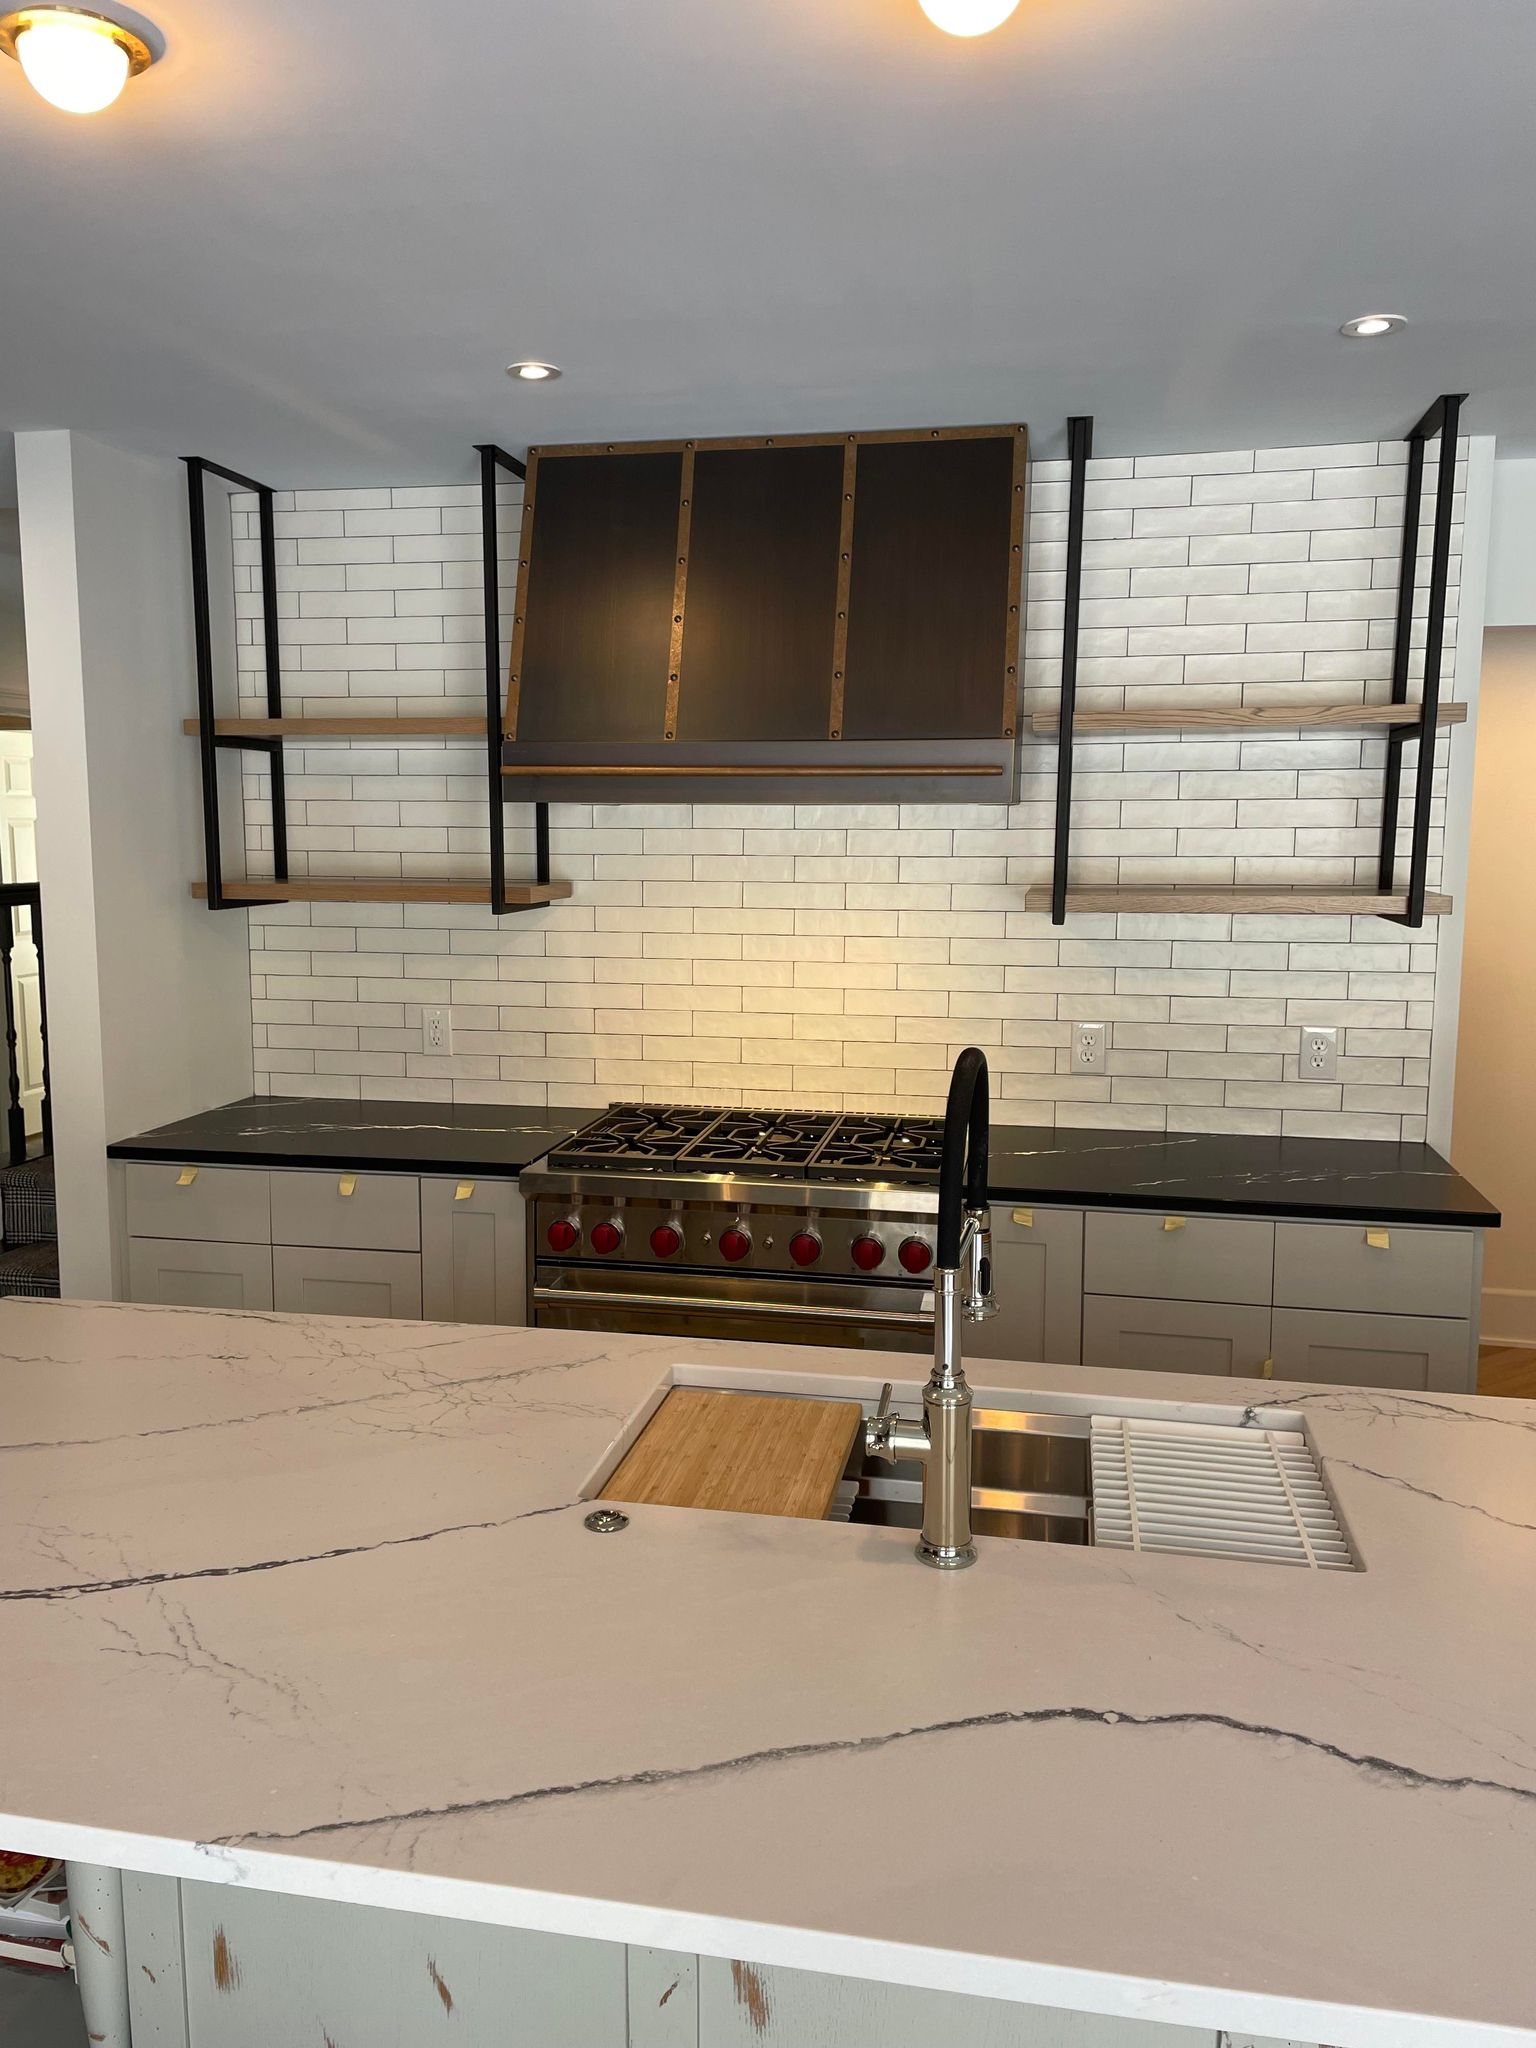 A rustic brick backsplash, kitchen design idea, french-inspired elegant white kitchen cabinets, exquisite marble kitchen countertops, and kitchen table idea